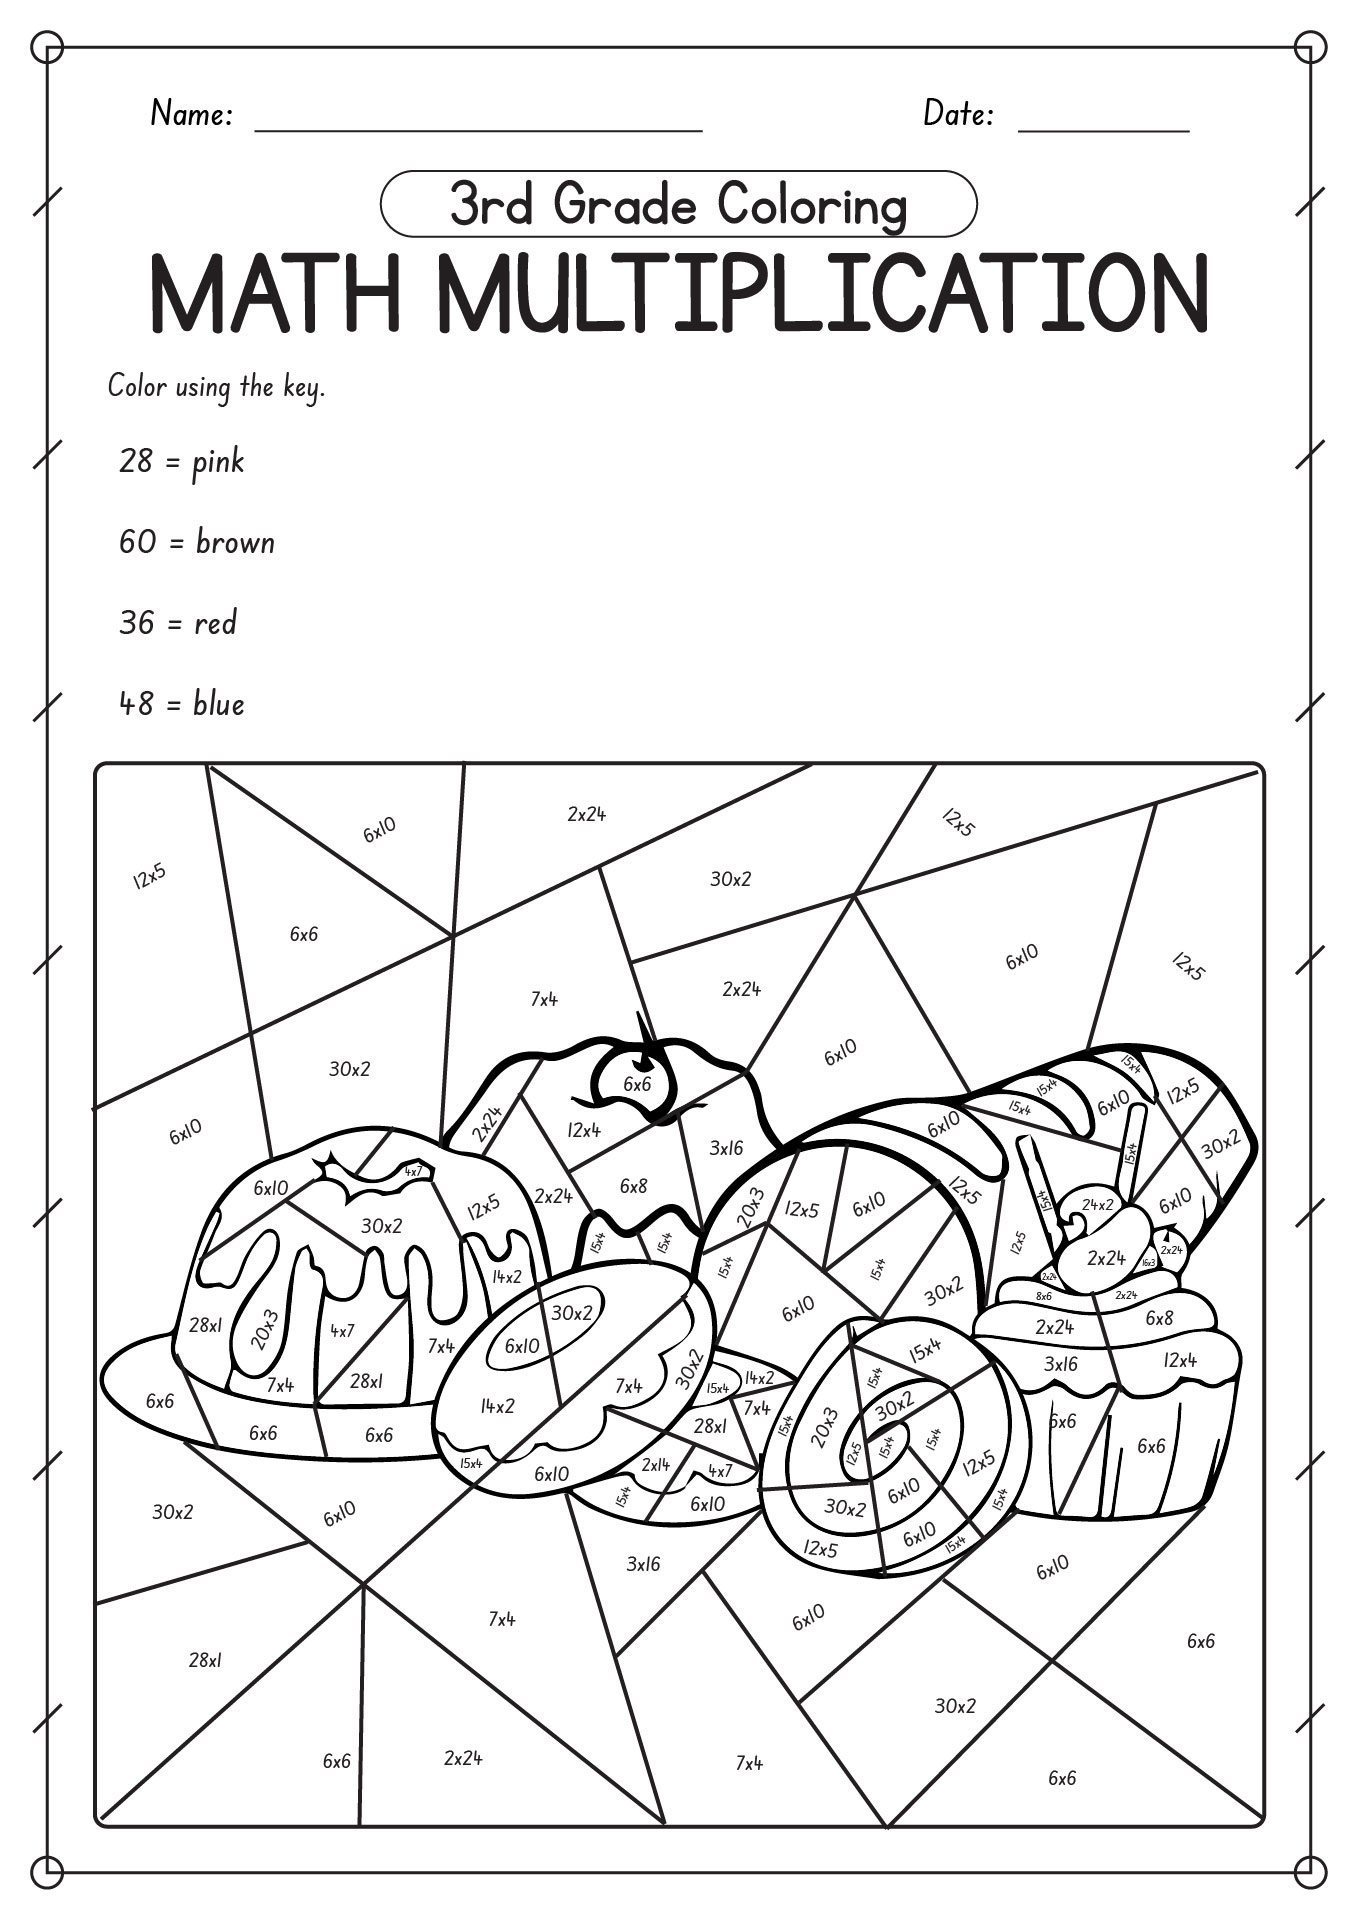 3rd Grade Math Multiplication Coloring Worksheet